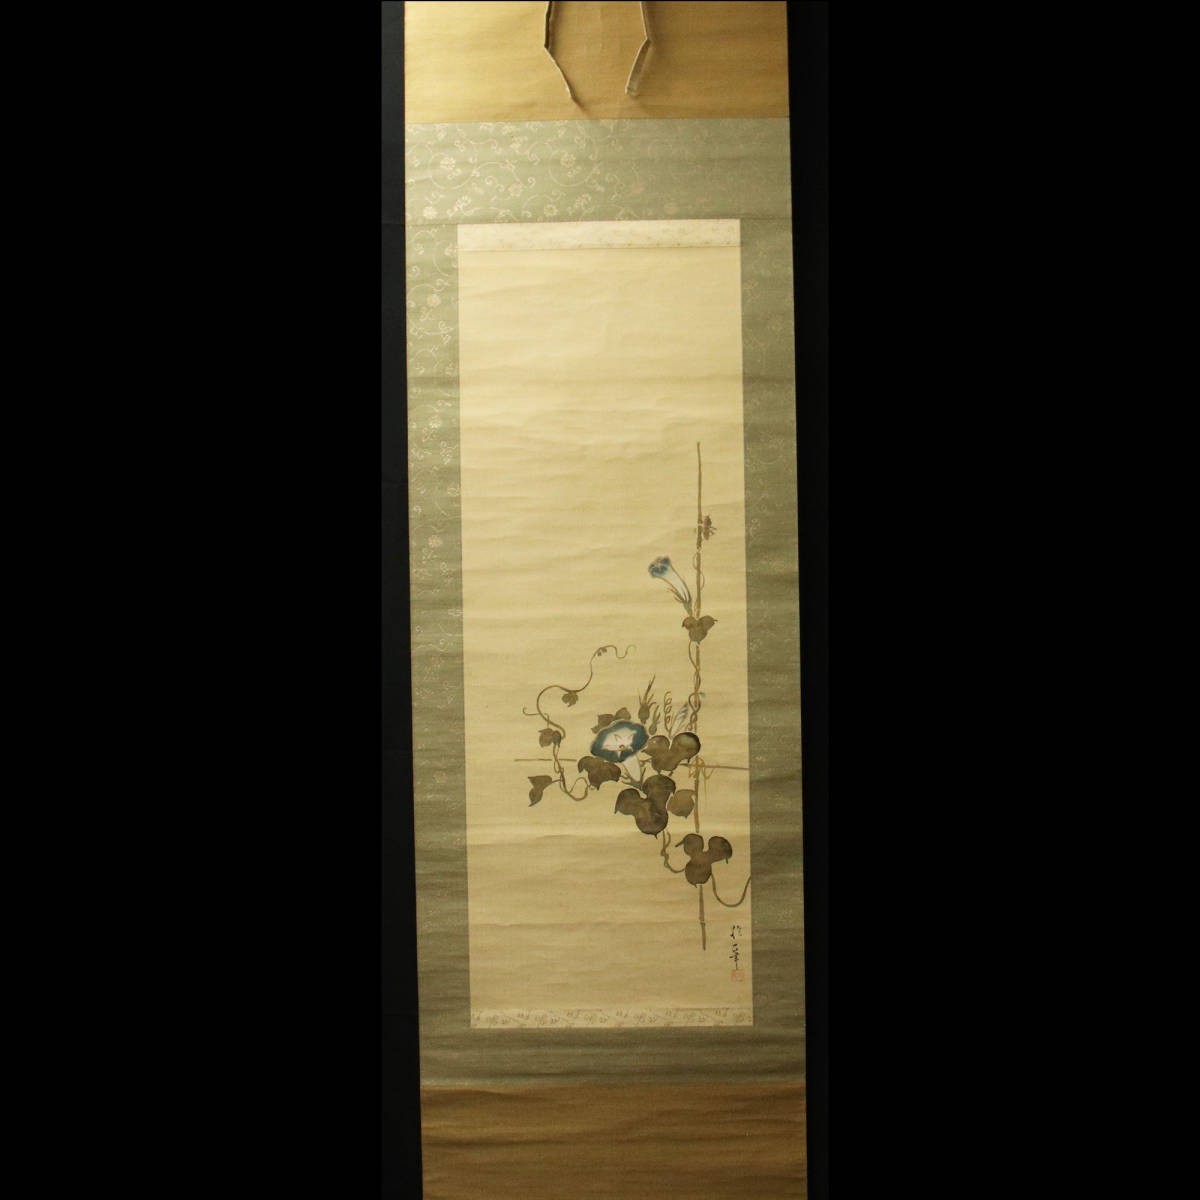 [Copia] ■ Pintura japonesa antigua ■ Libro de papel, supuestamente escrito por Sakai Hoitsu, Gloria de la mañana (obra maestra: Sakai Doitsu) 230512046, Cuadro, pintura japonesa, Flores y pájaros, Fauna silvestre